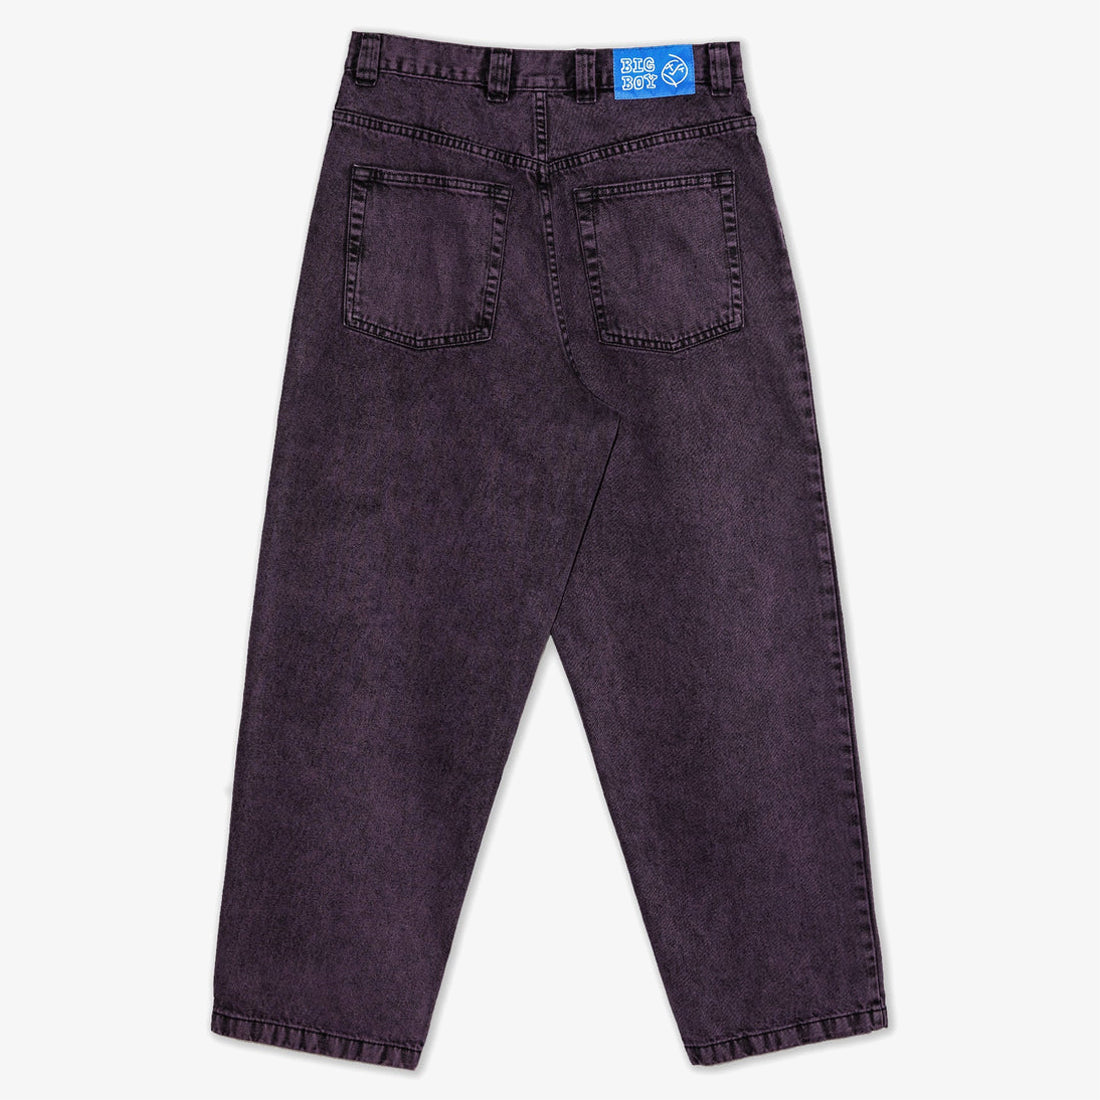  WoJogom Men Fashions Purple Jeans 2021 Harem Pants